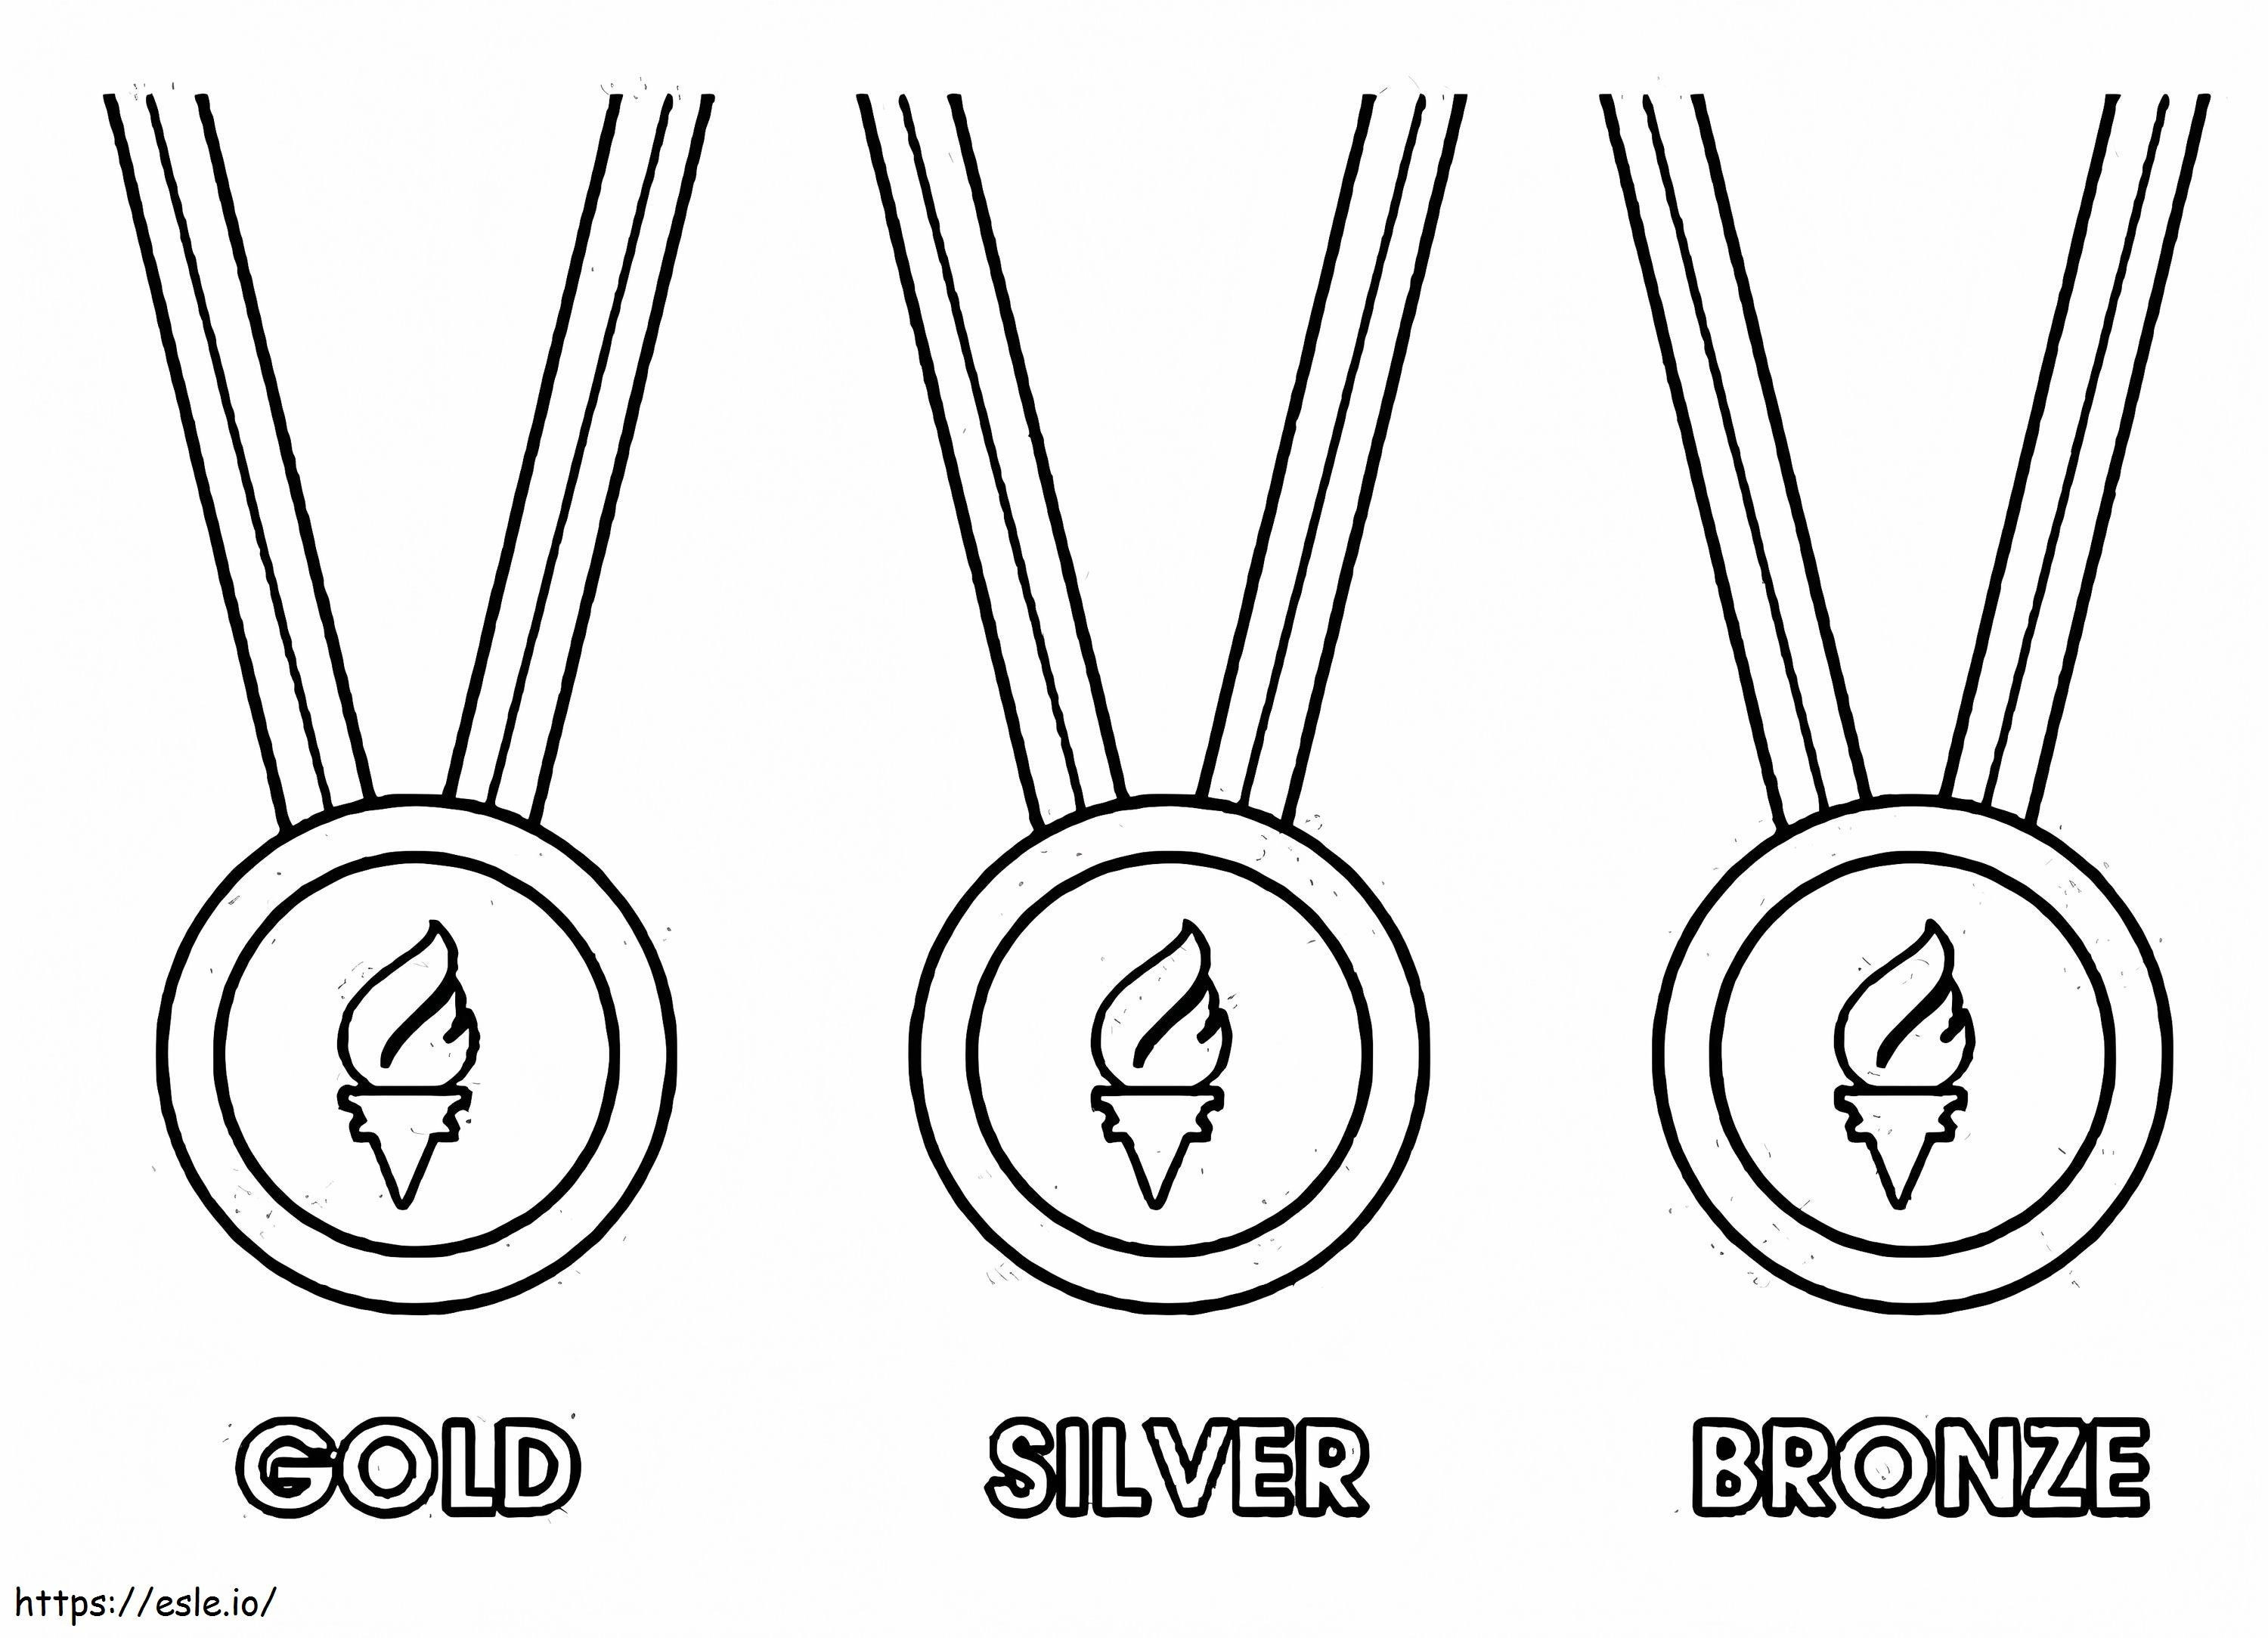 Olimpiyat Madalyaları boyama